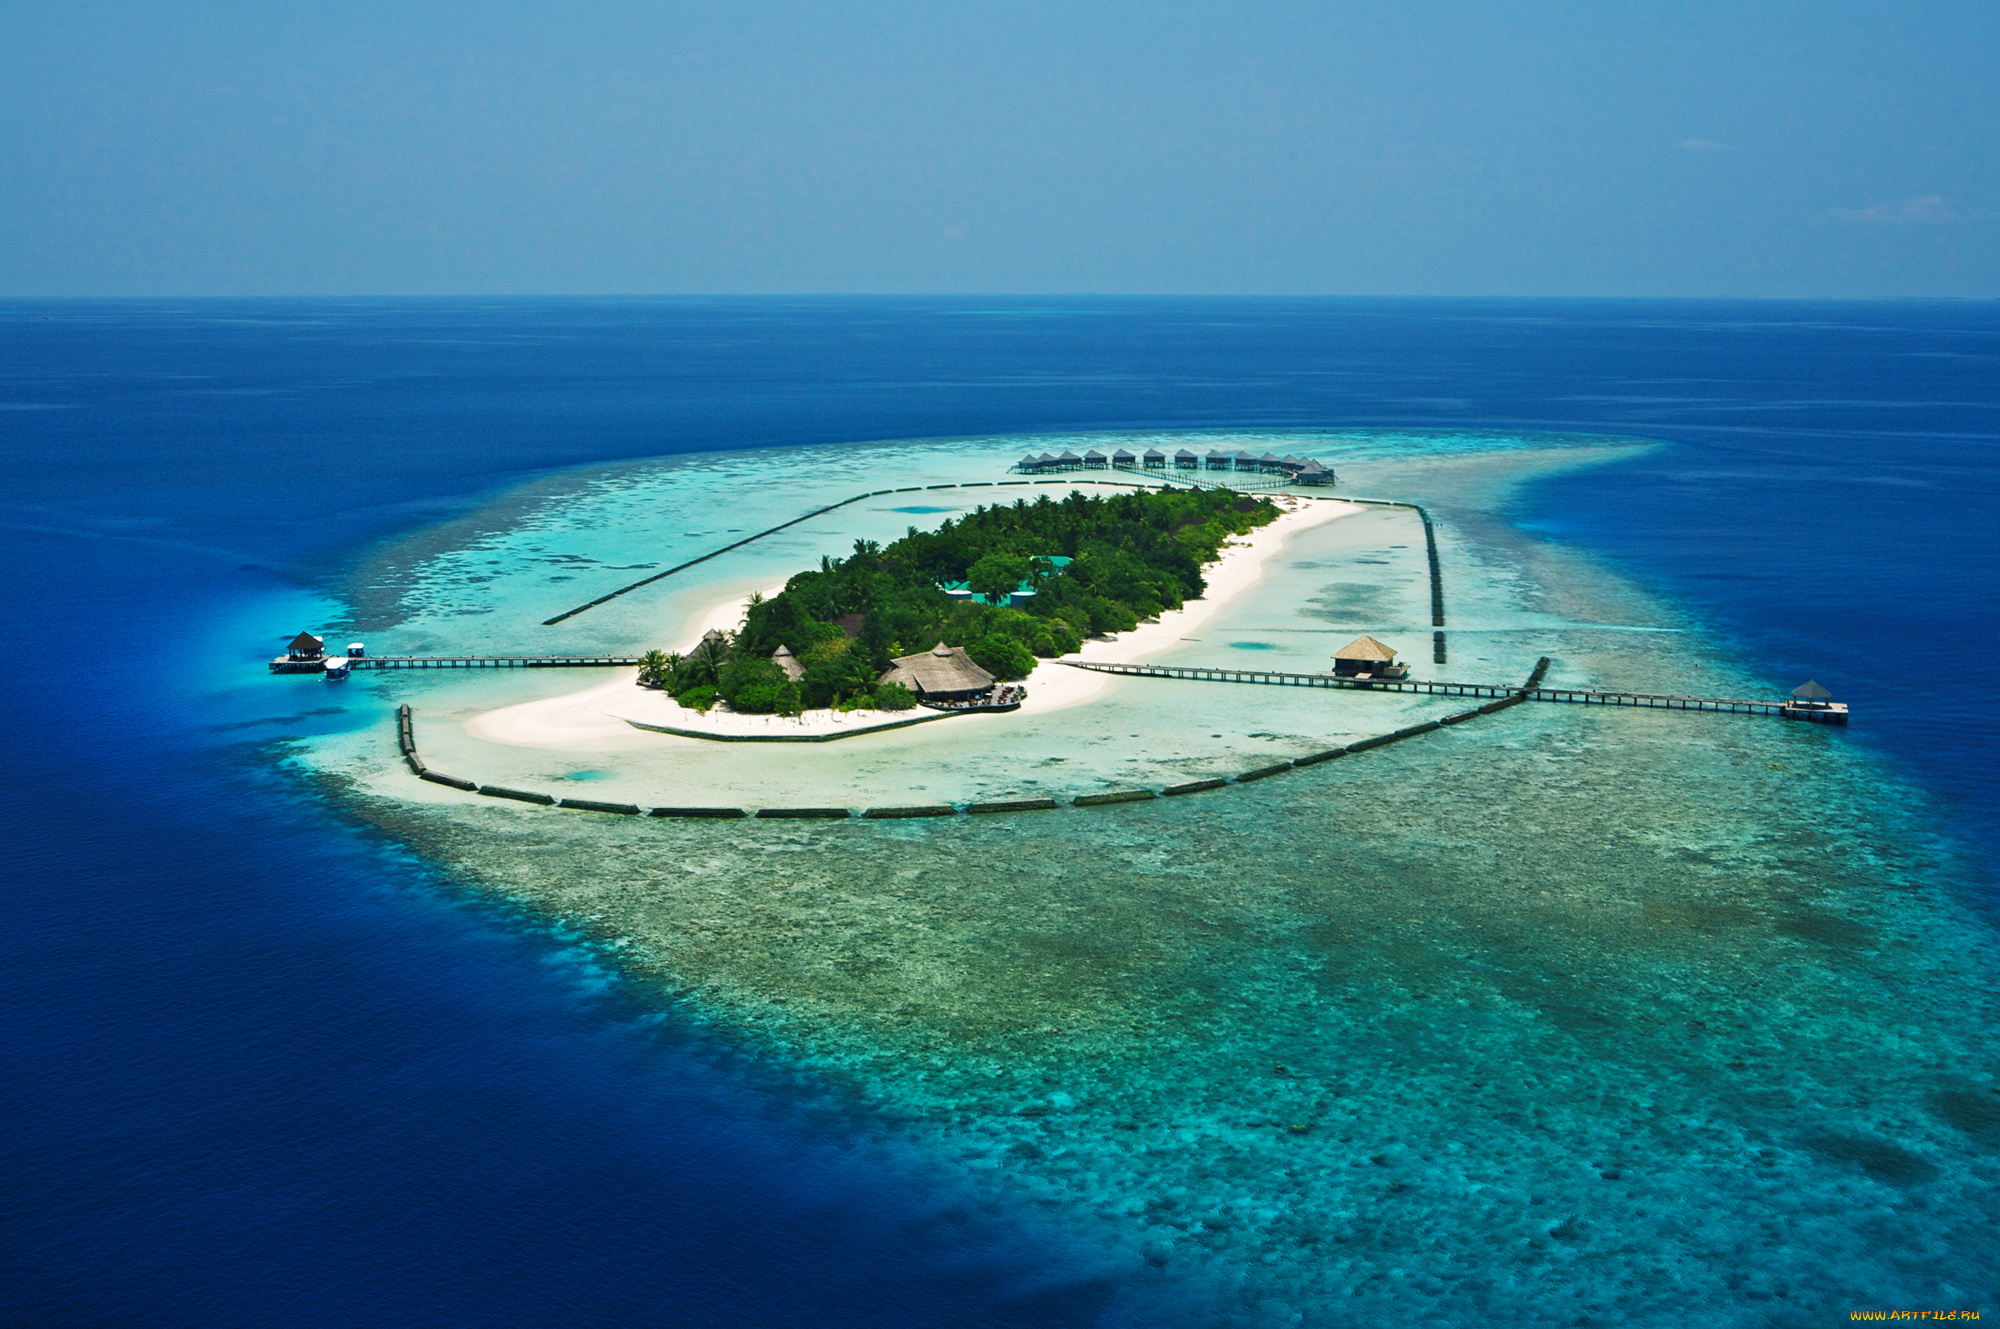 Html islands. Атолл Расду Мальдивы. Остров Мальдивы Атолл. Фихалхохи Мальдивы. Атолл Лааму Мальдивские острова.